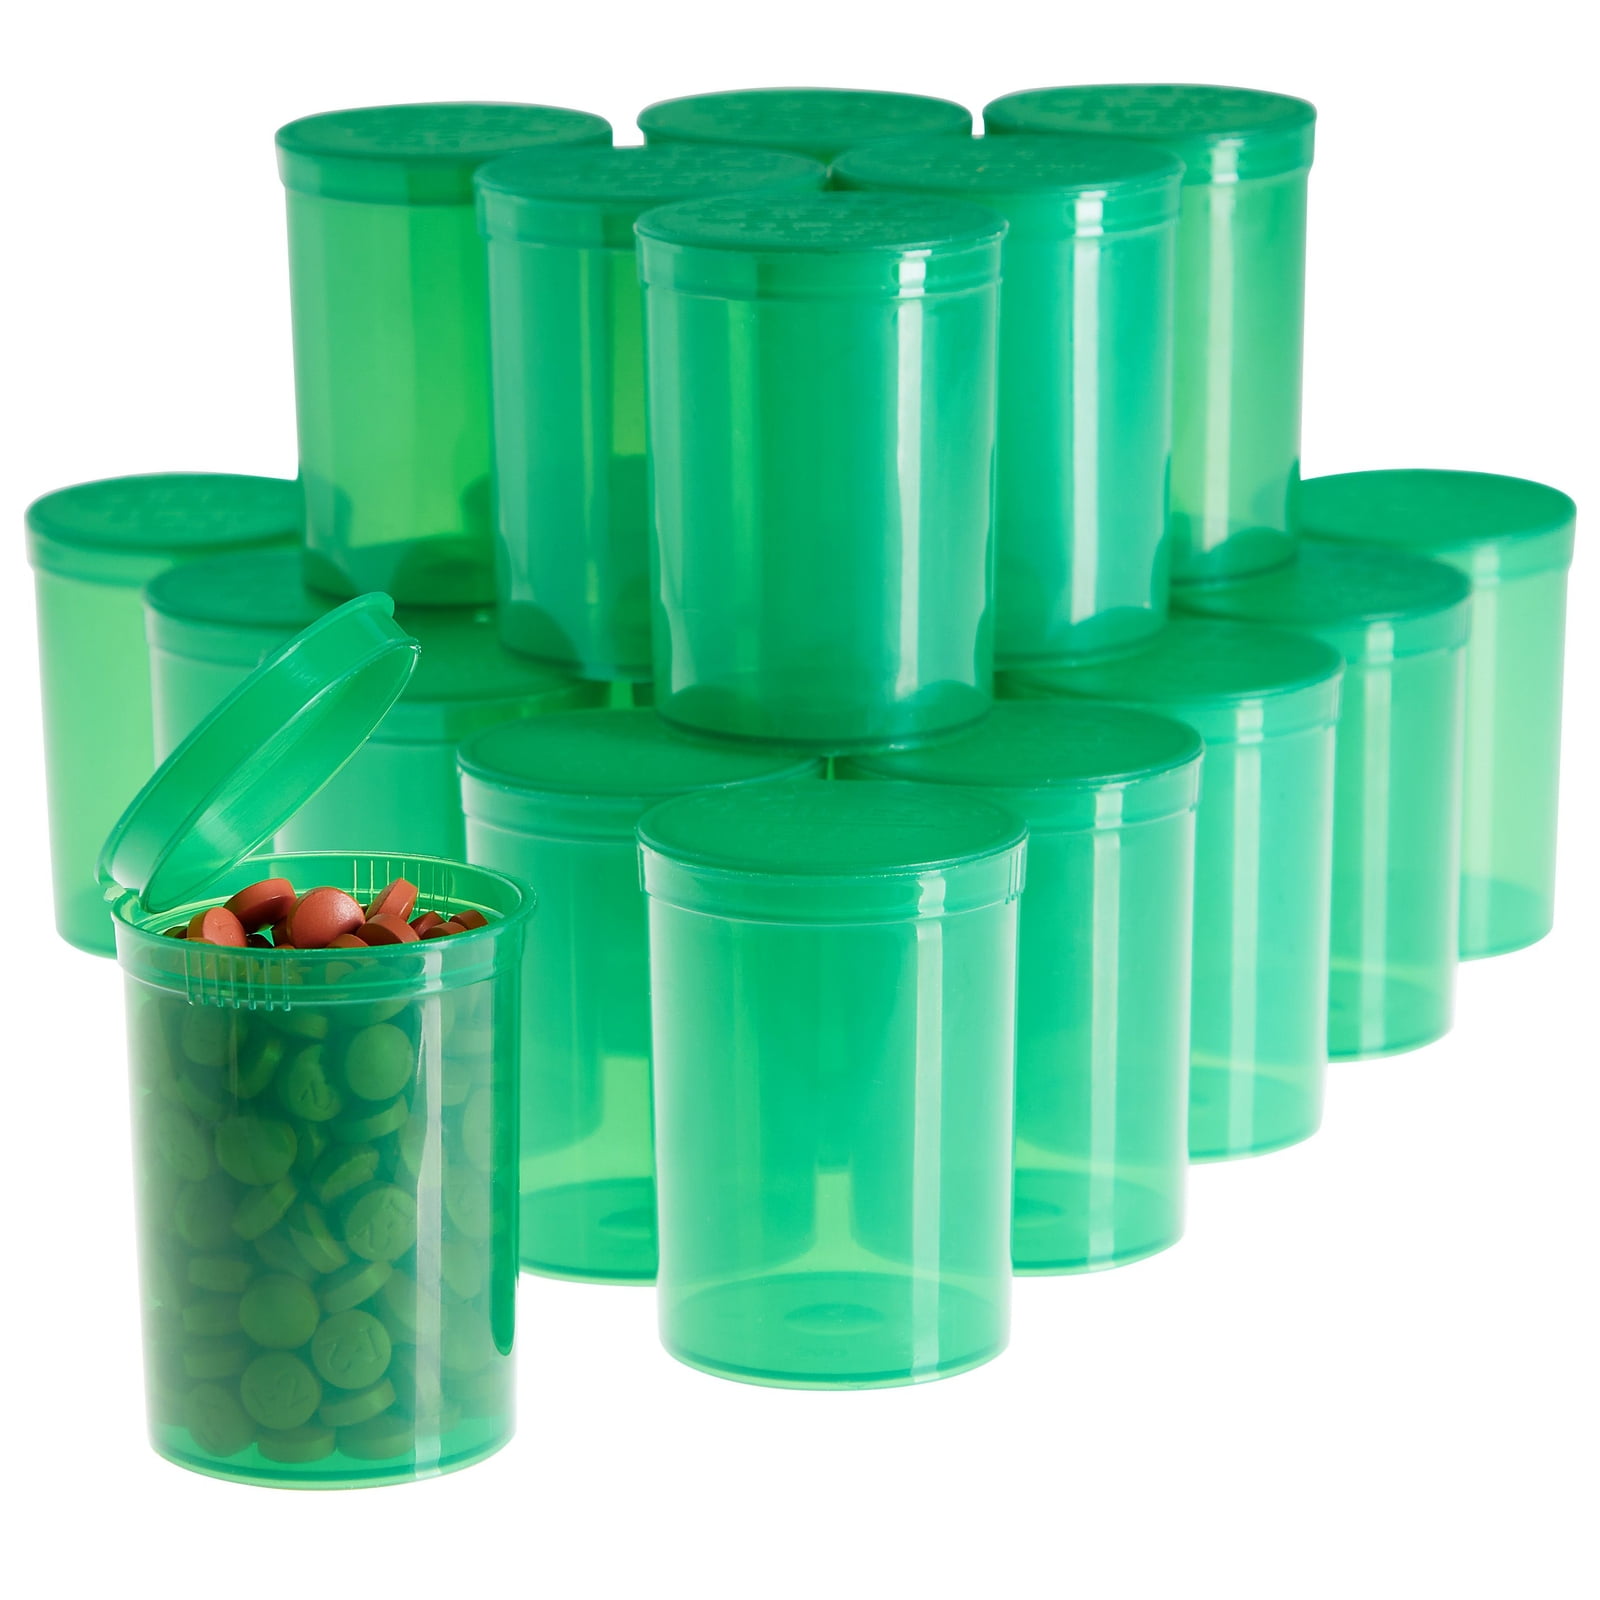 storage ideas for pill bottles｜TikTok Search